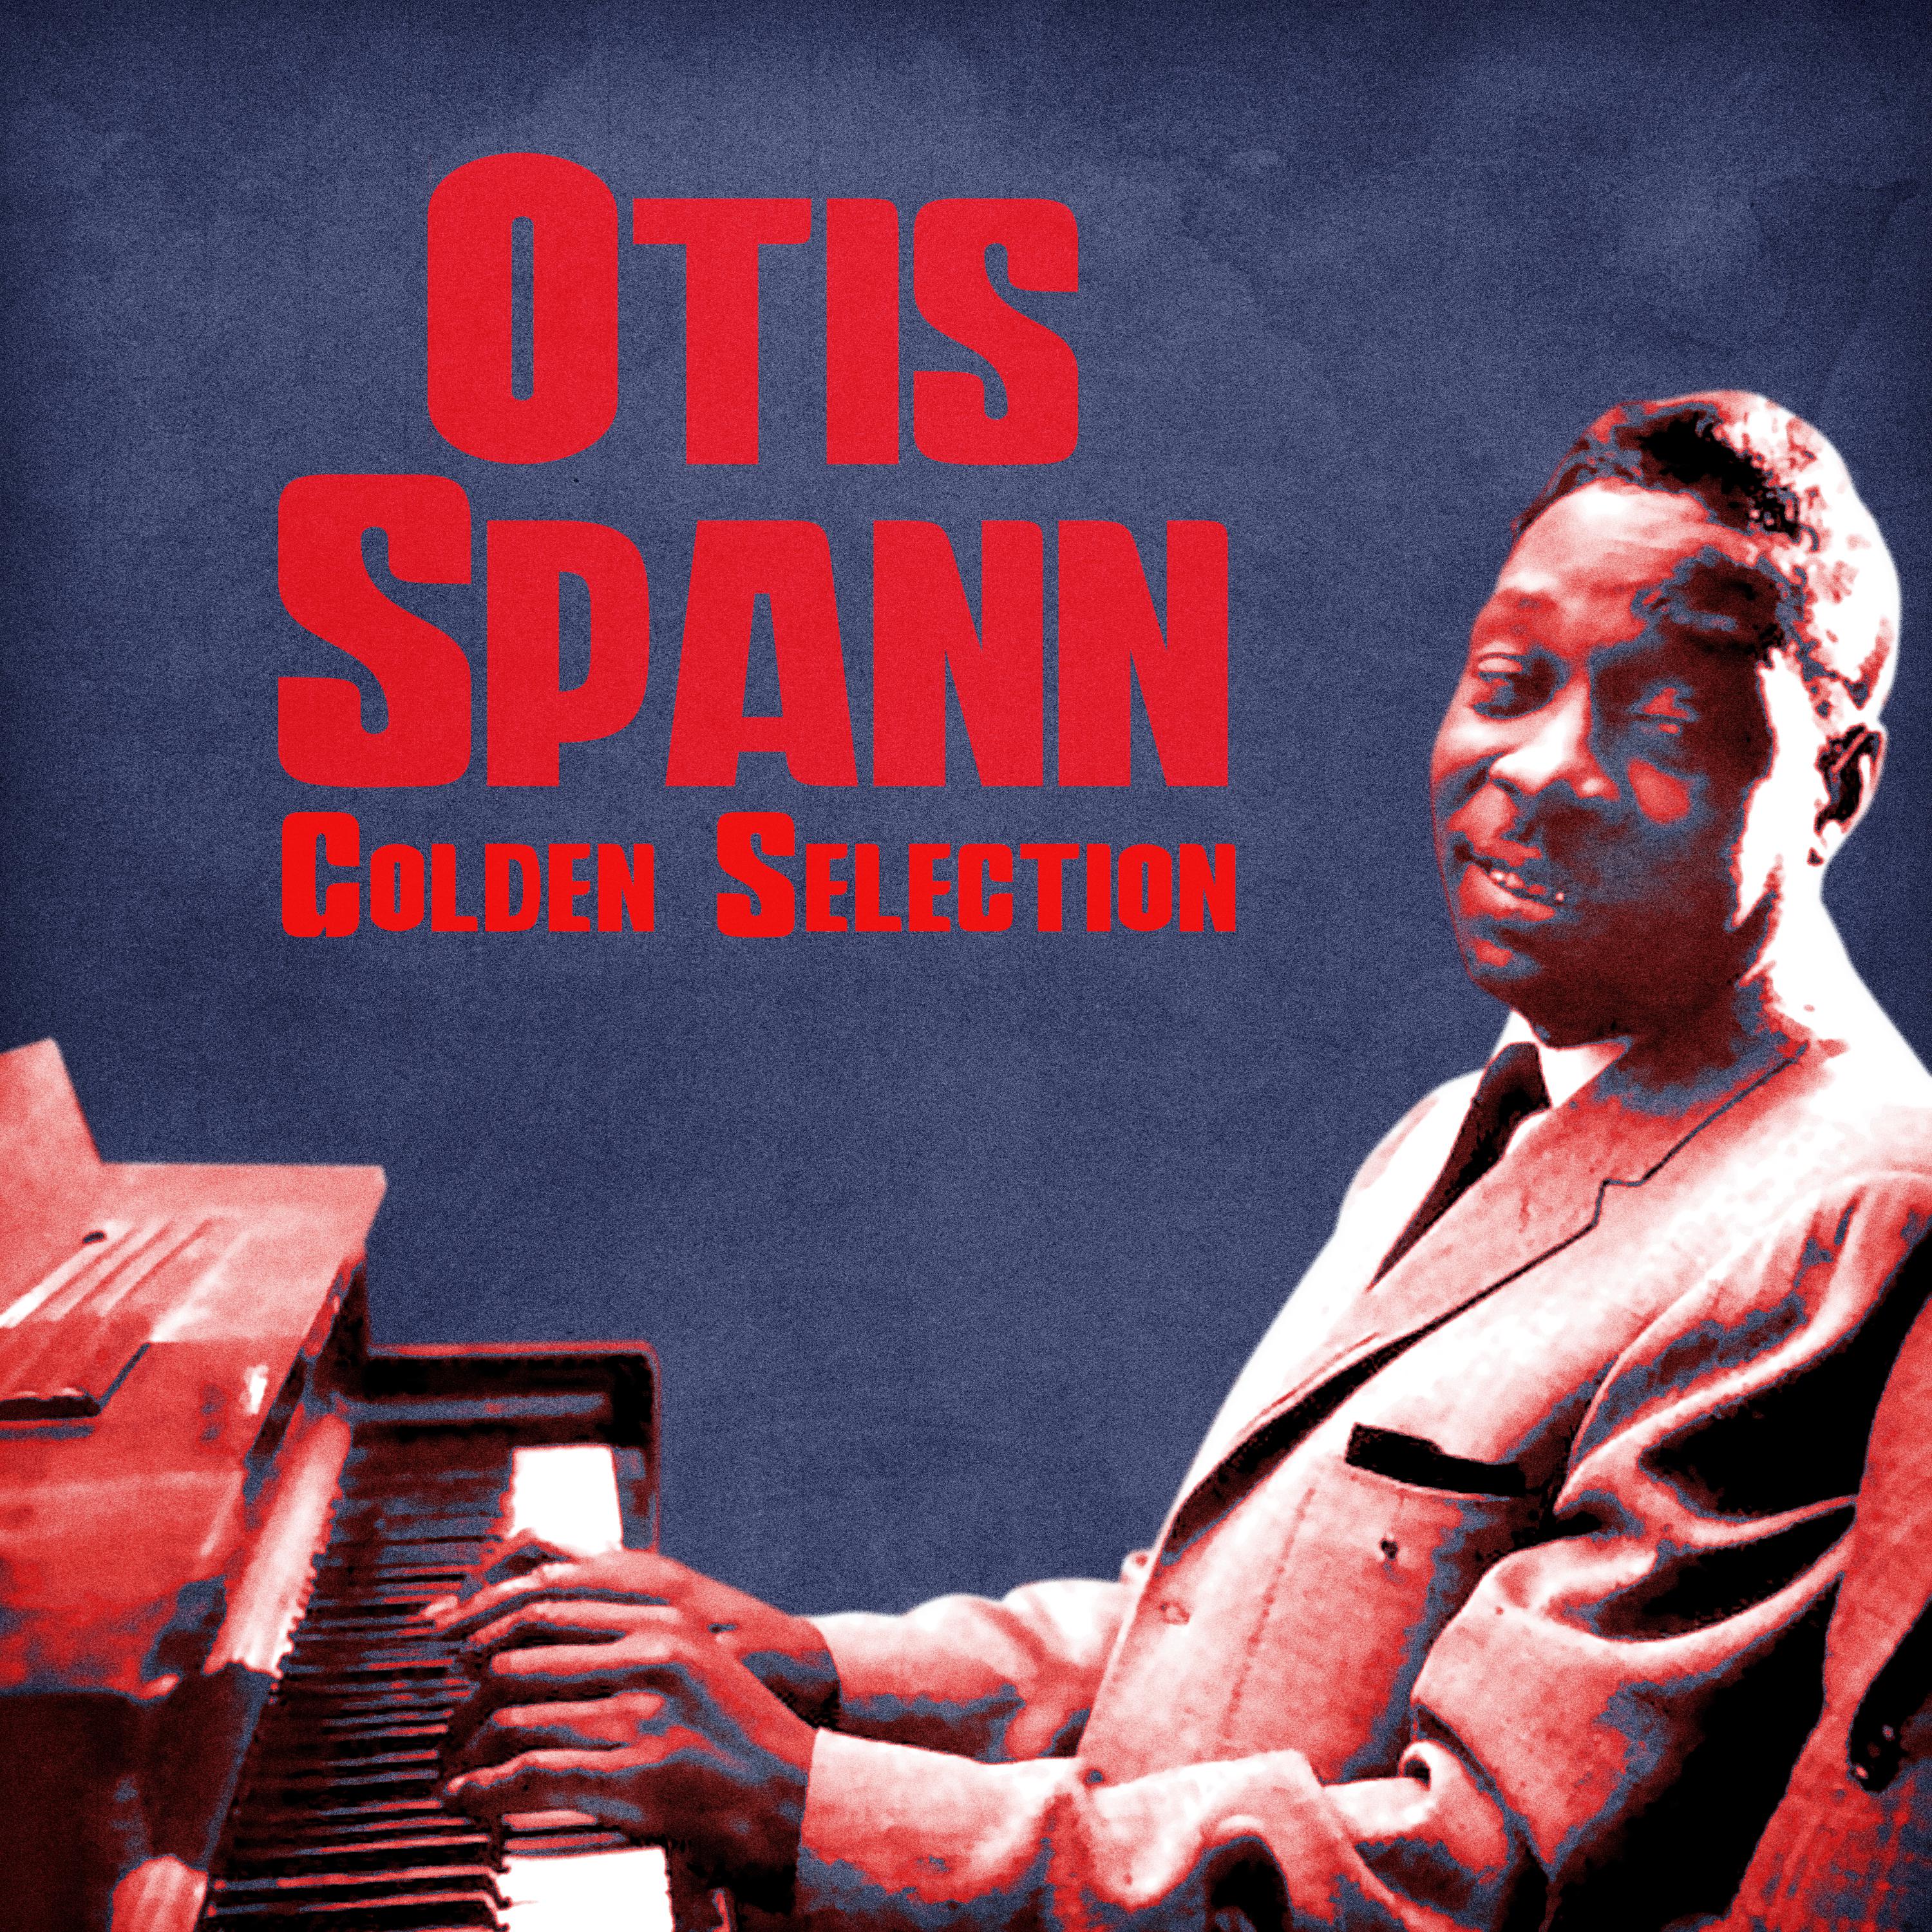 Otis Spann - The Hard Way (Remastered)